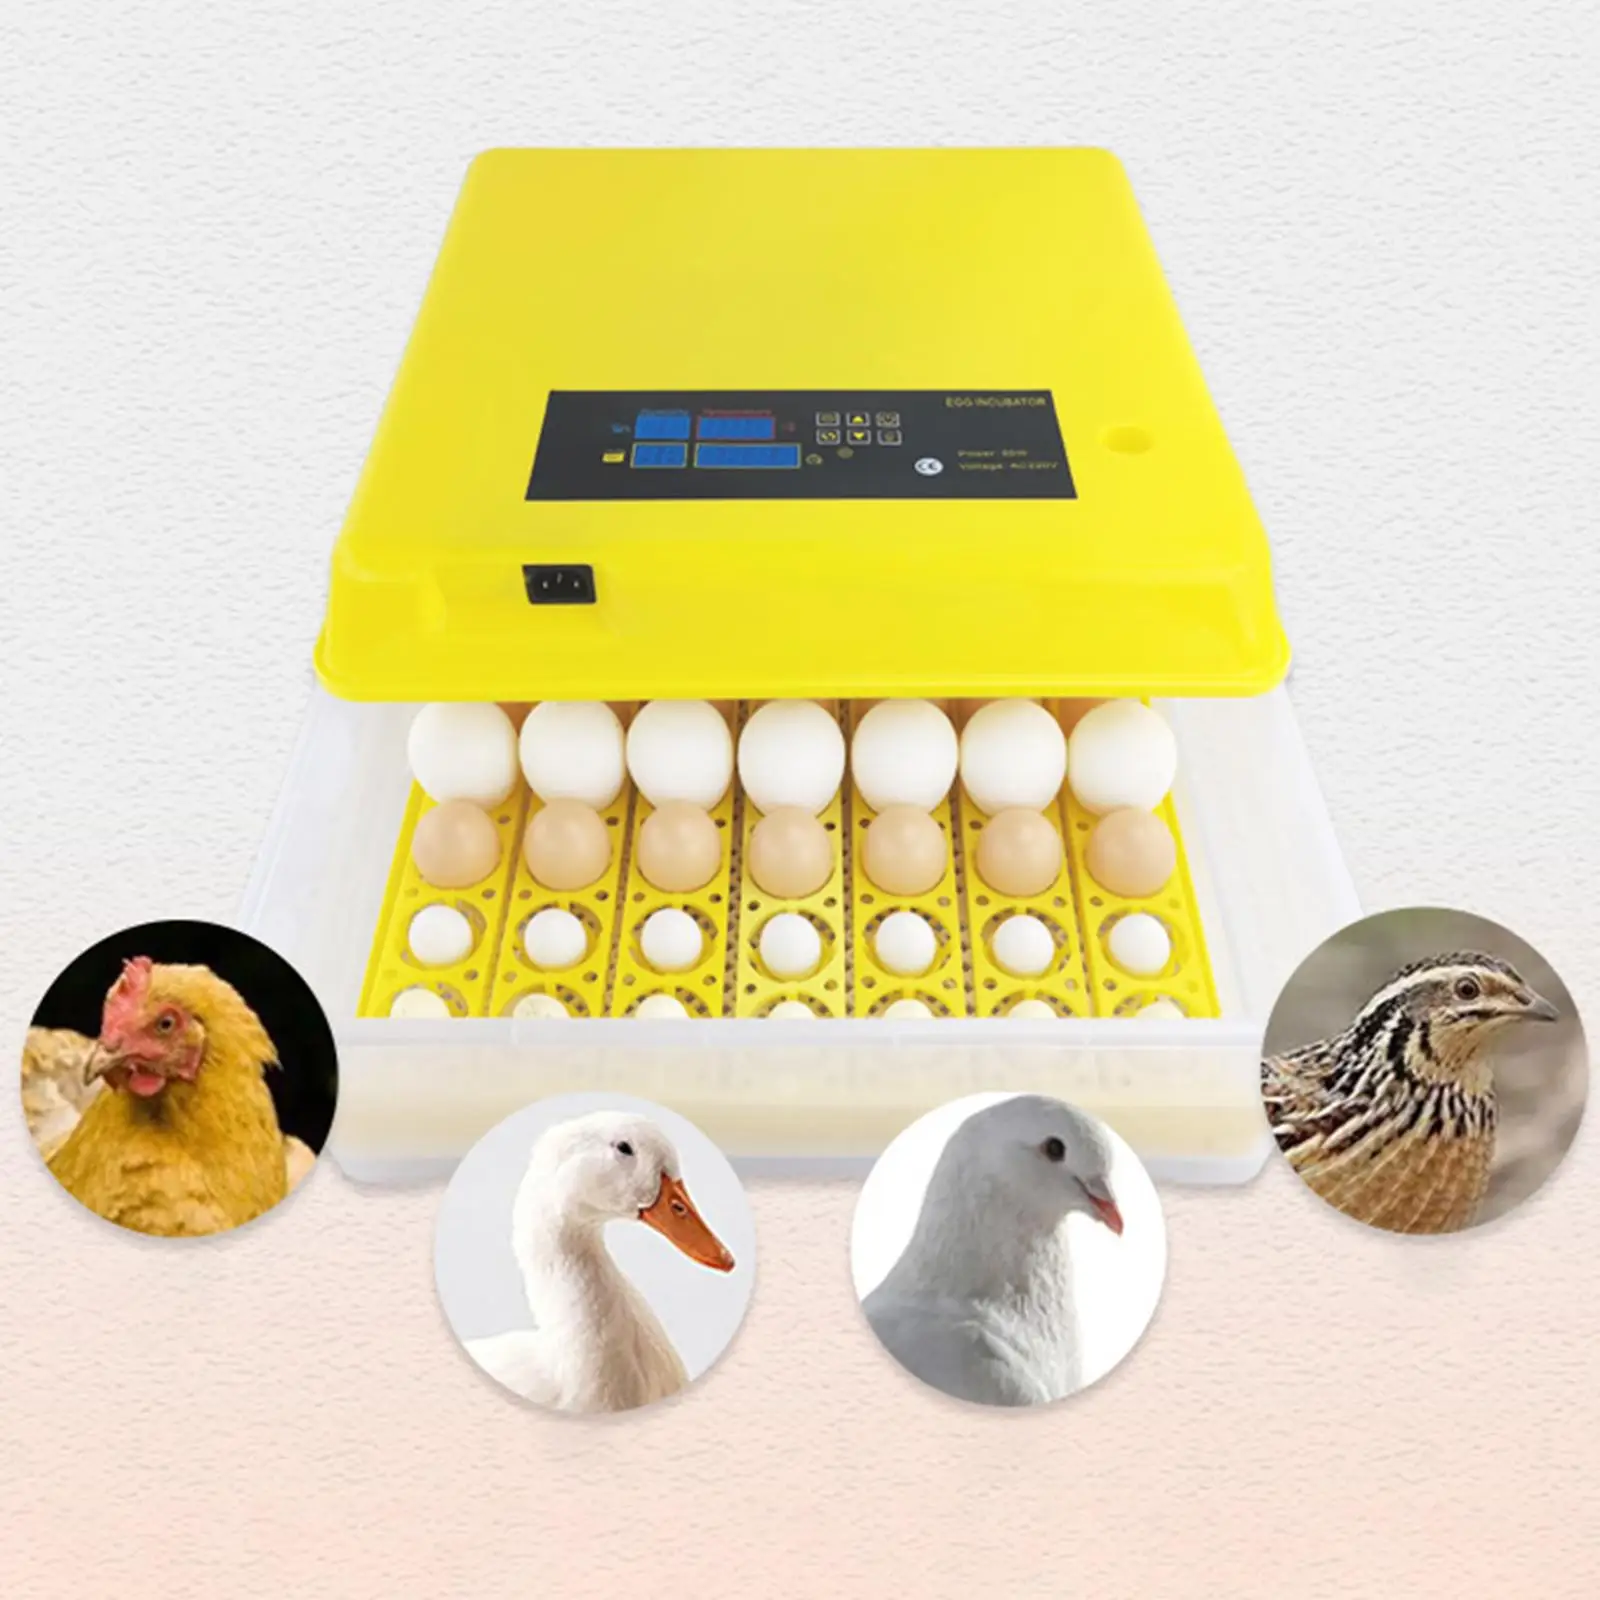 Digital Egg Incubator Brooding Machine Temperature and Humidity Control Egg Turner Farm Egg Incubator for Turkey Birds Hatching